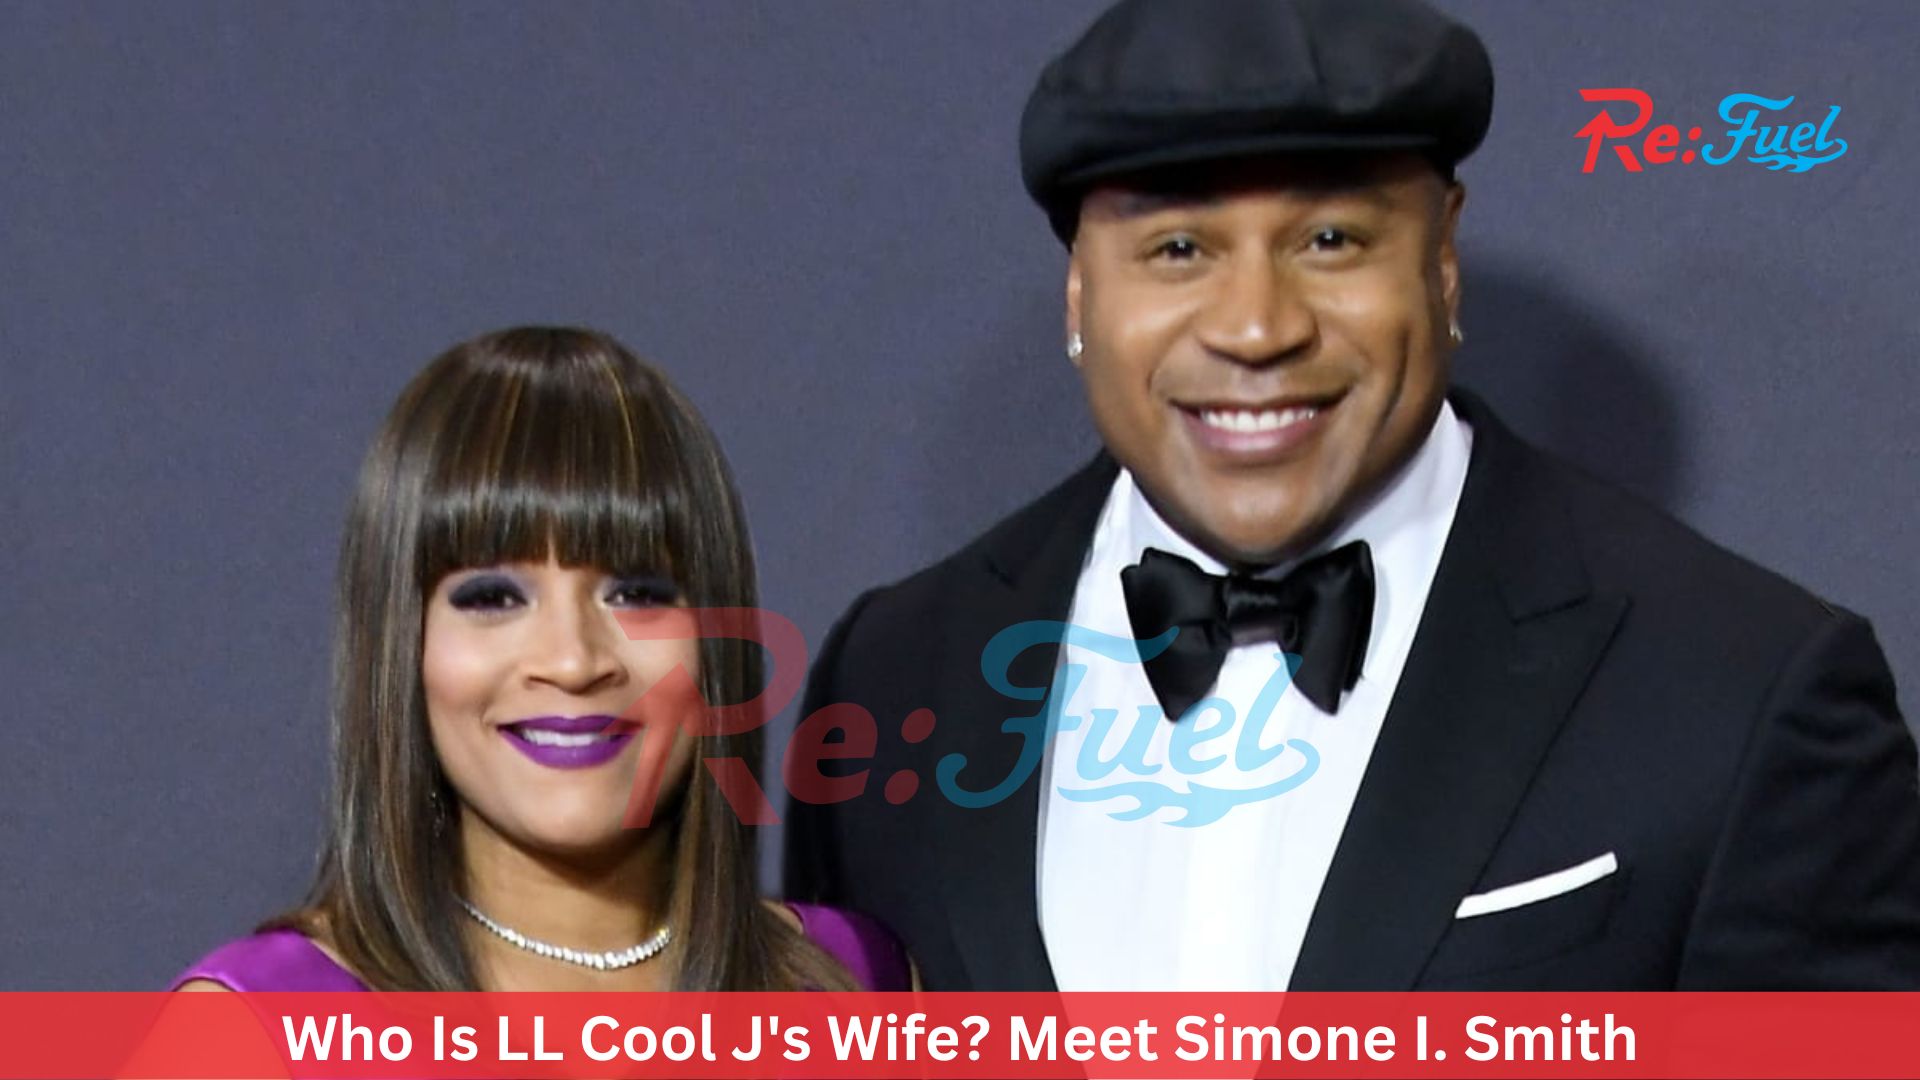 Who Is LL Cool J's Wife? Meet Simone I. Smith